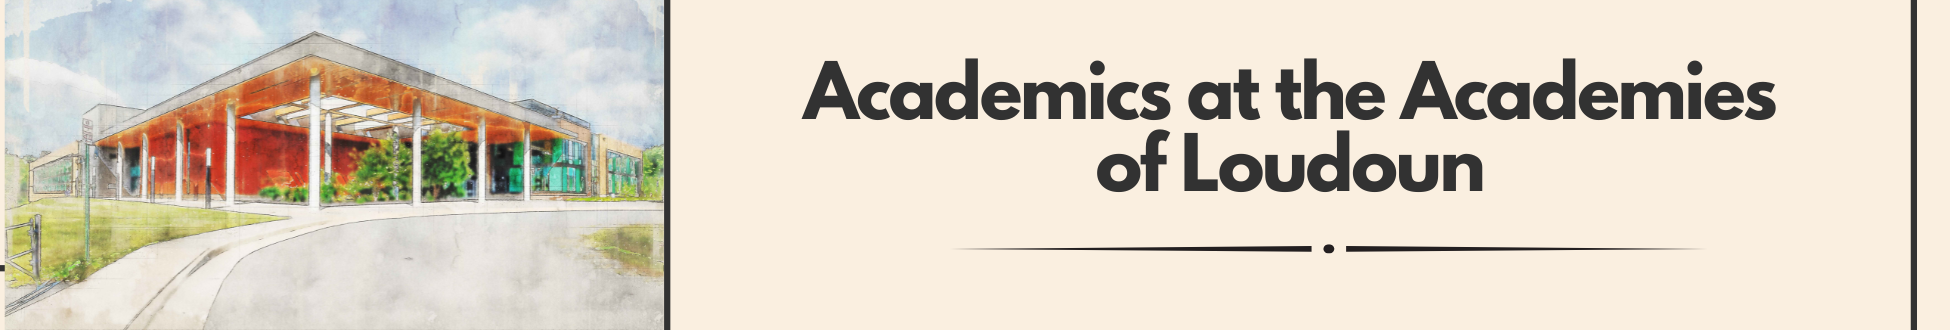 Academics at the Academies 